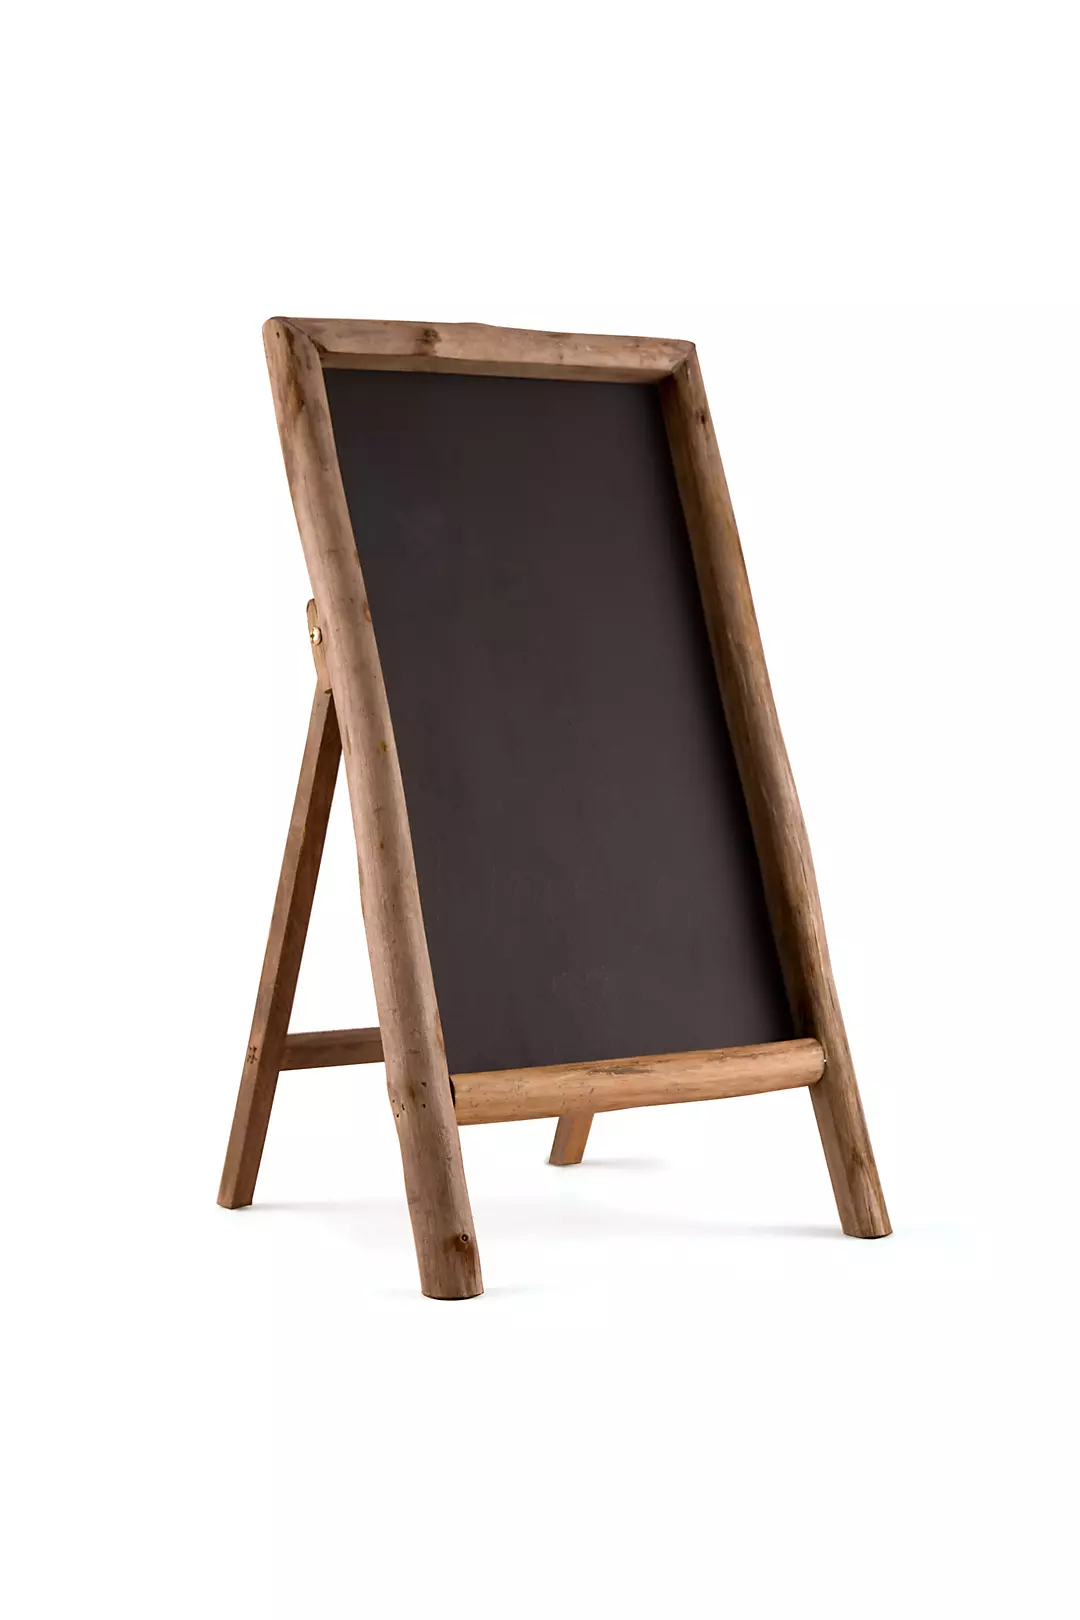 Standing Rustic Frame Chalkboard Sign Image 2